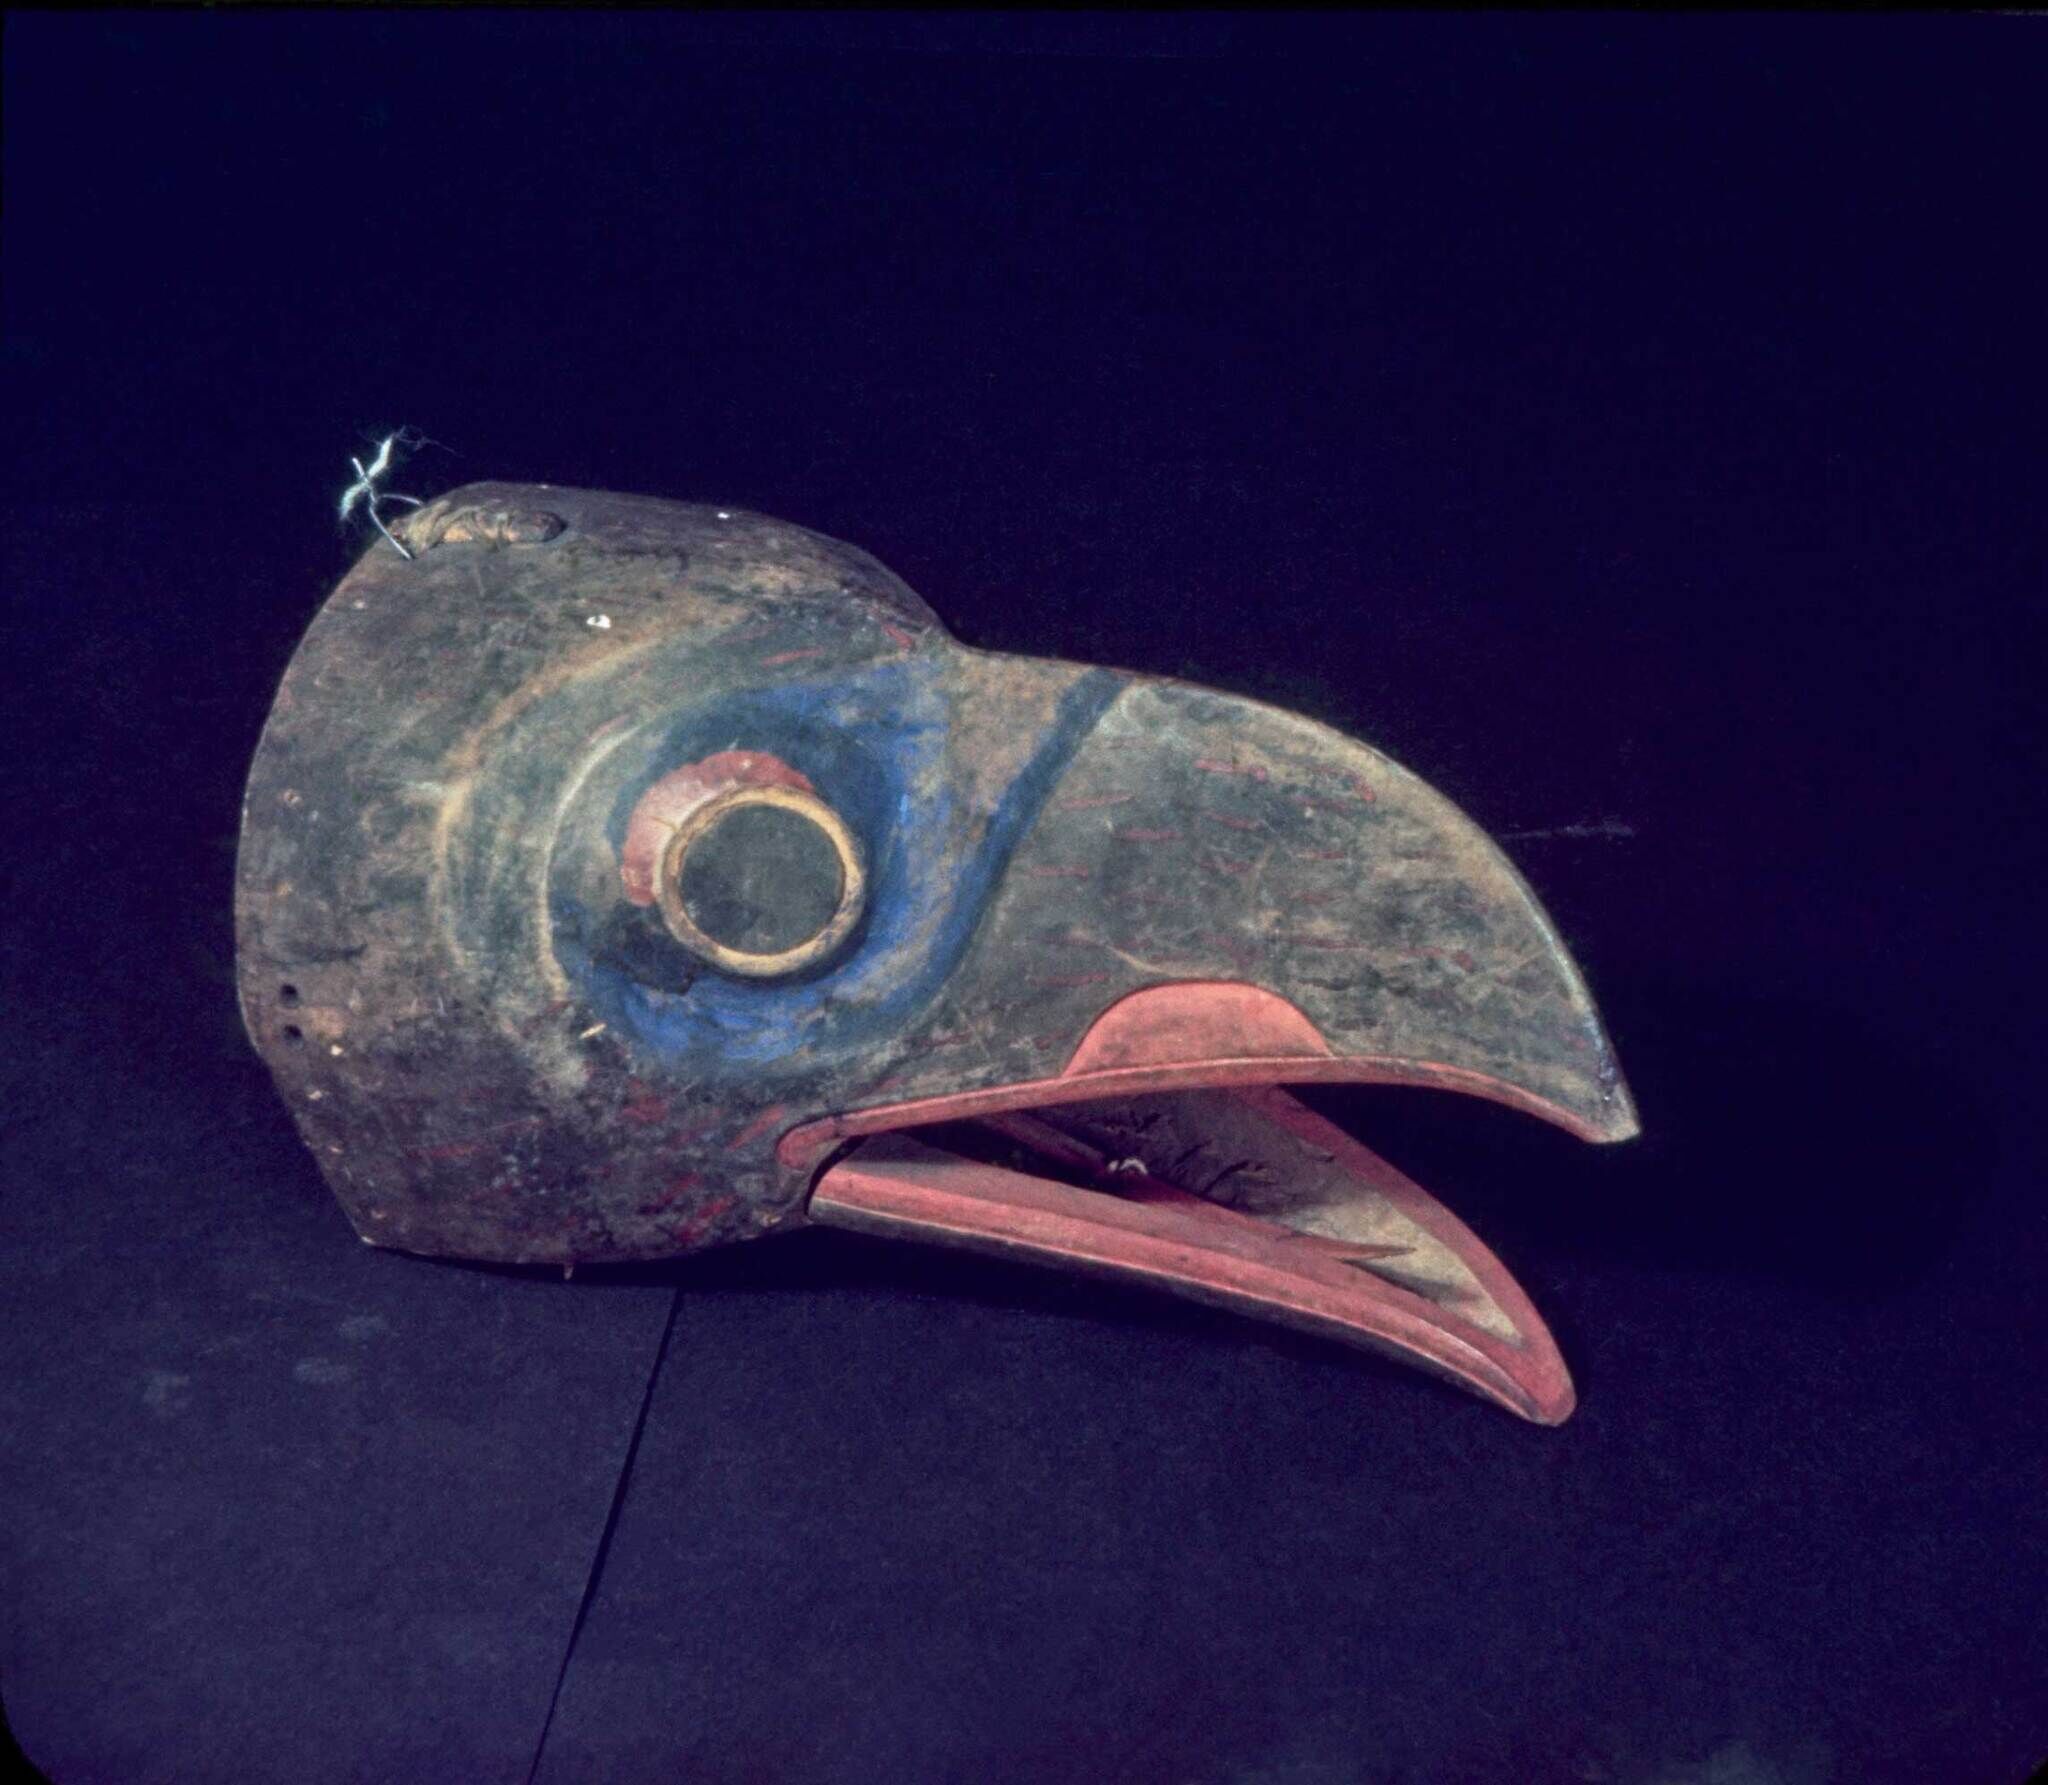 A decorative bird mask on a blue background.